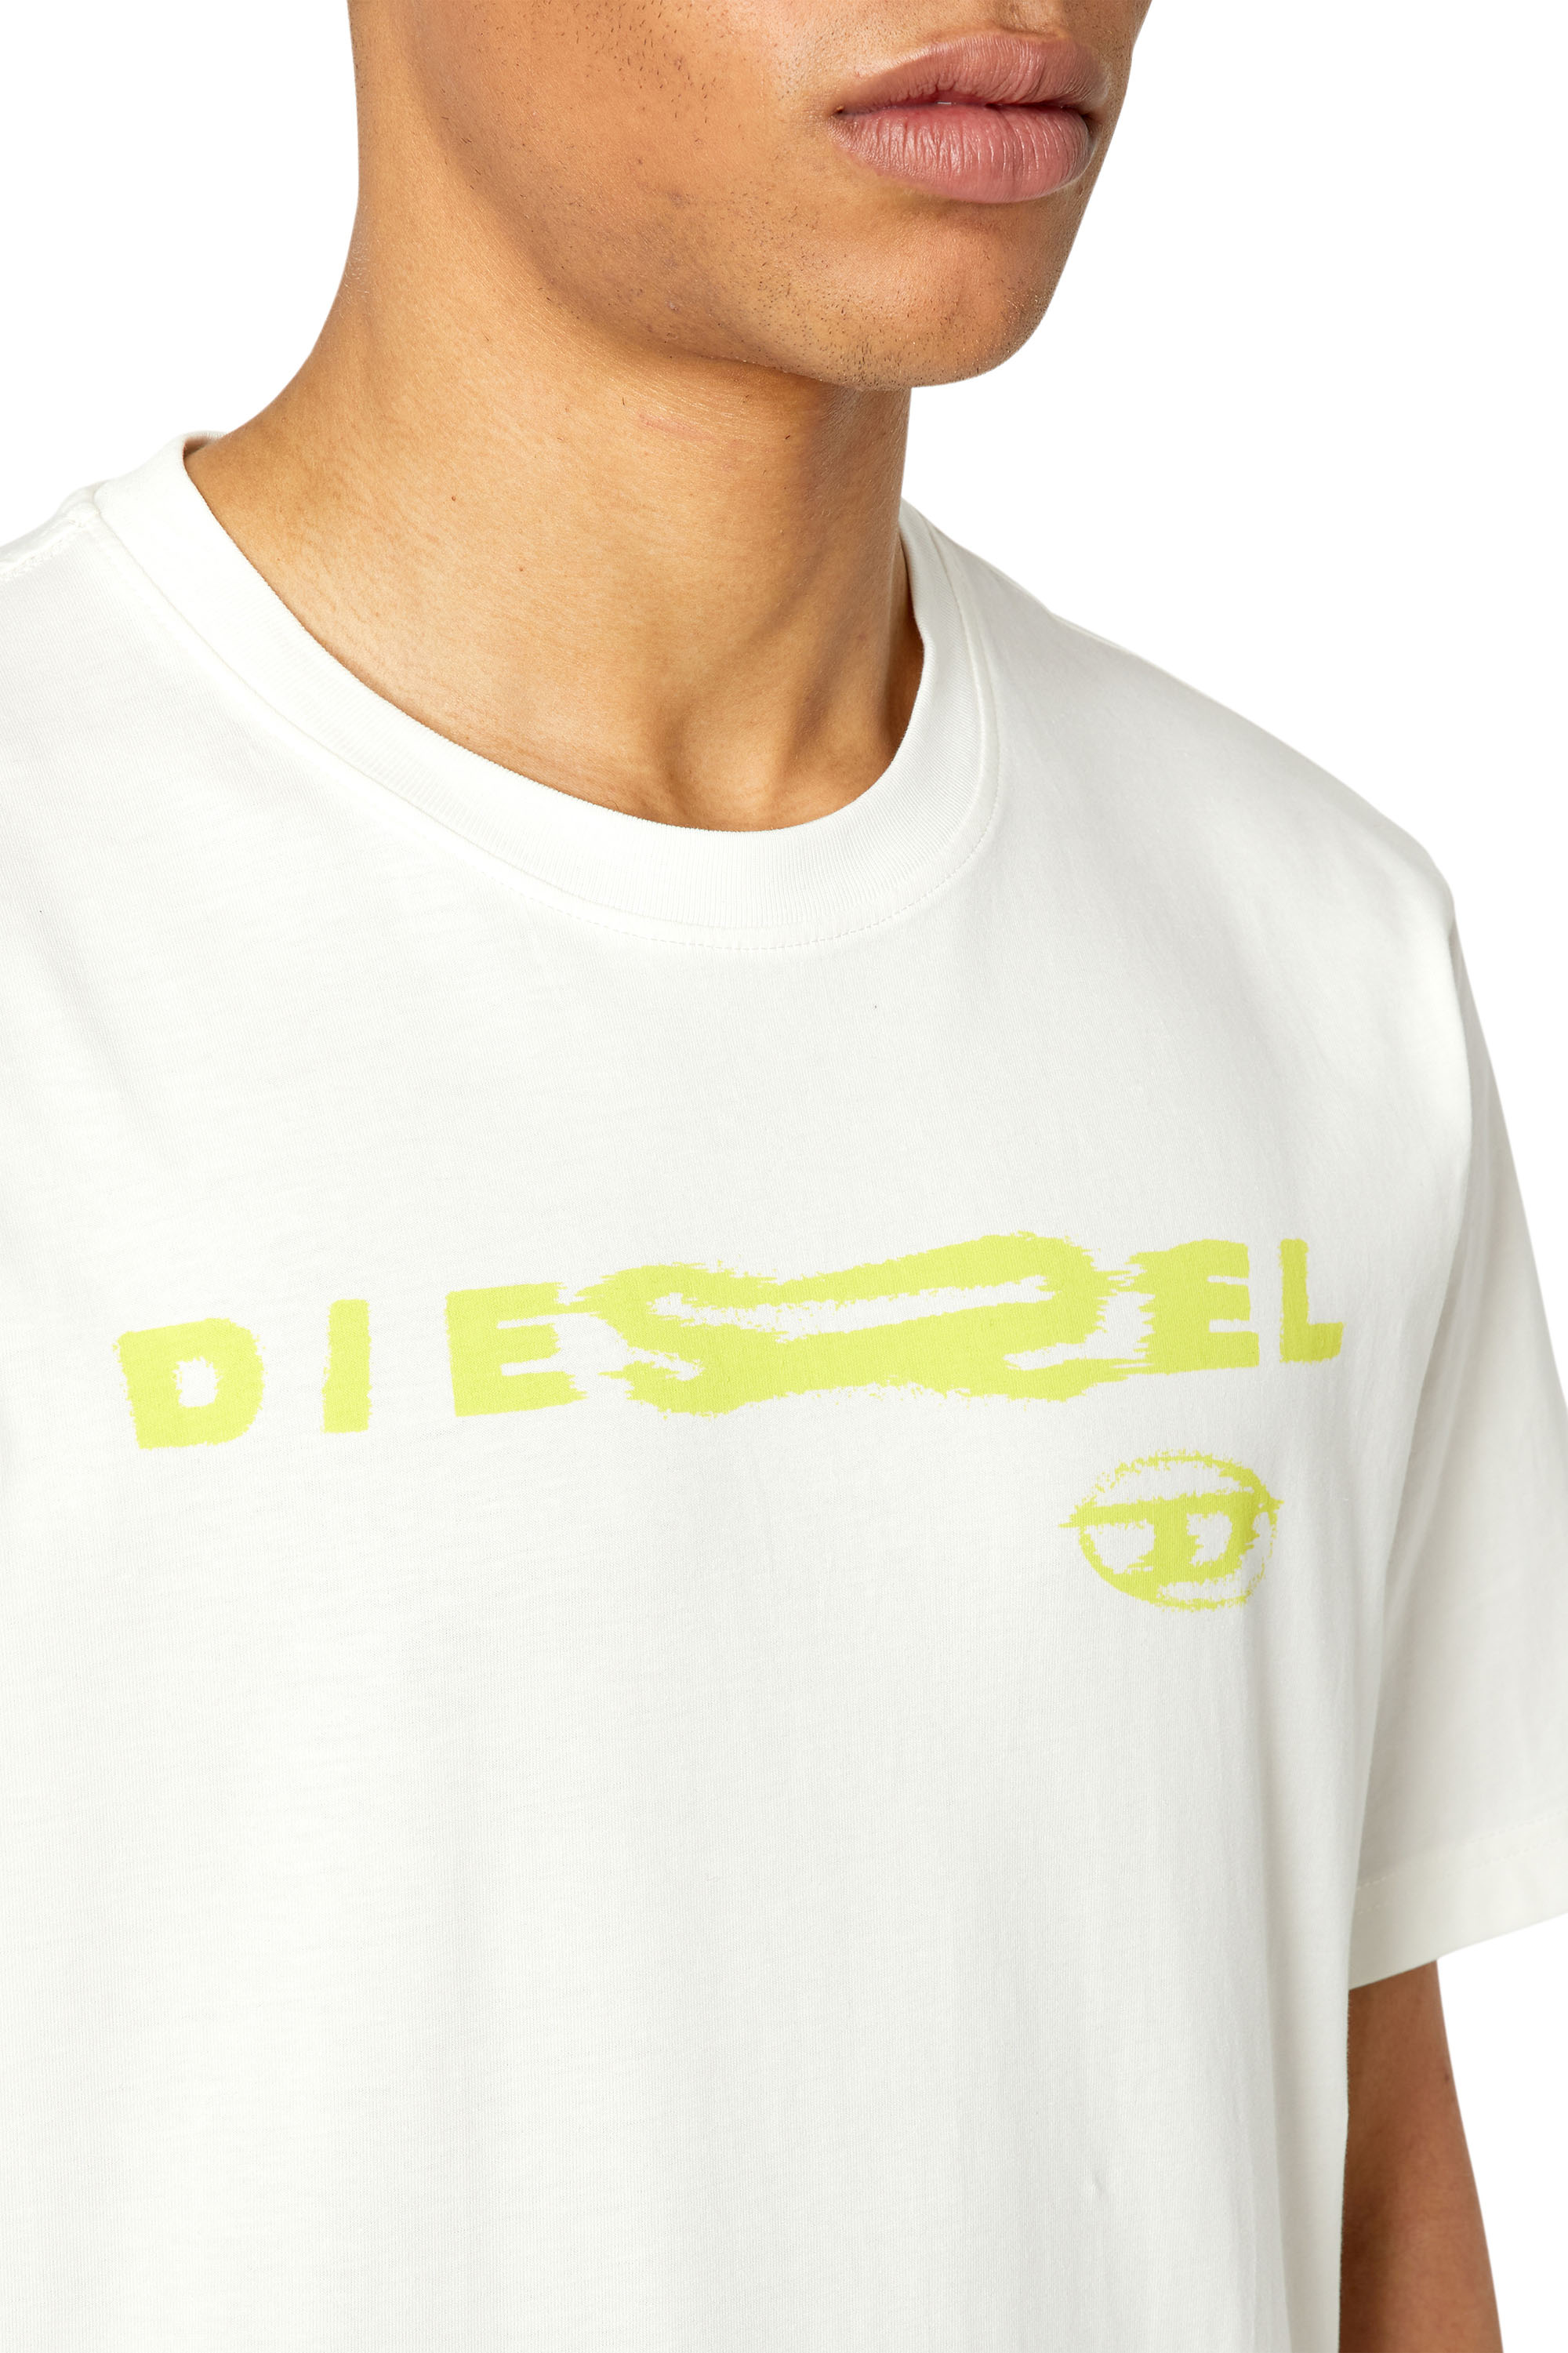 Diesel - T-JUST-G9, White - Image 4